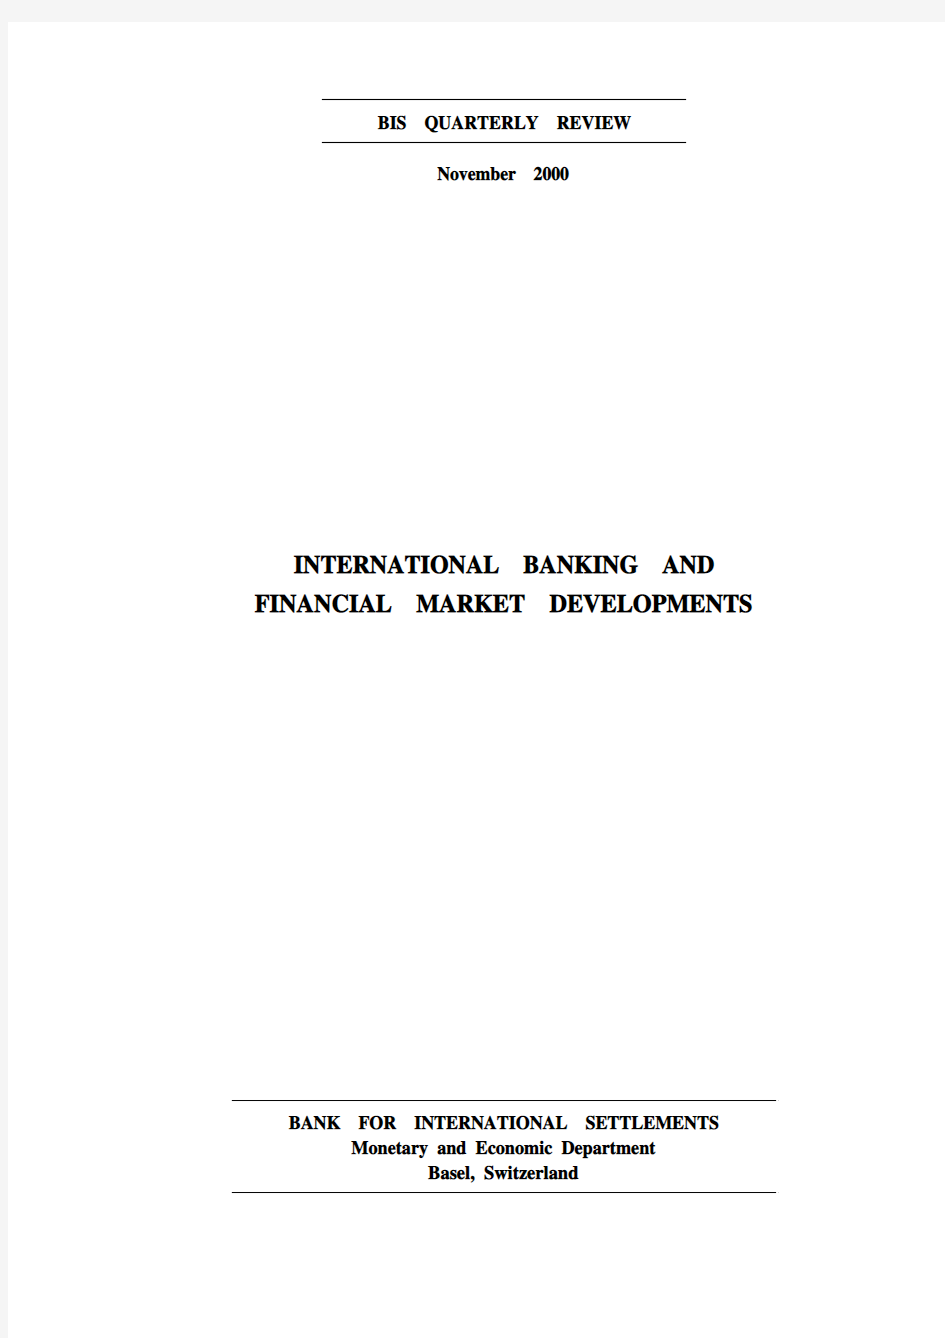 INTERNATIONAL BANKING AND FINANCIAL MARKET DEVELOPMENTS